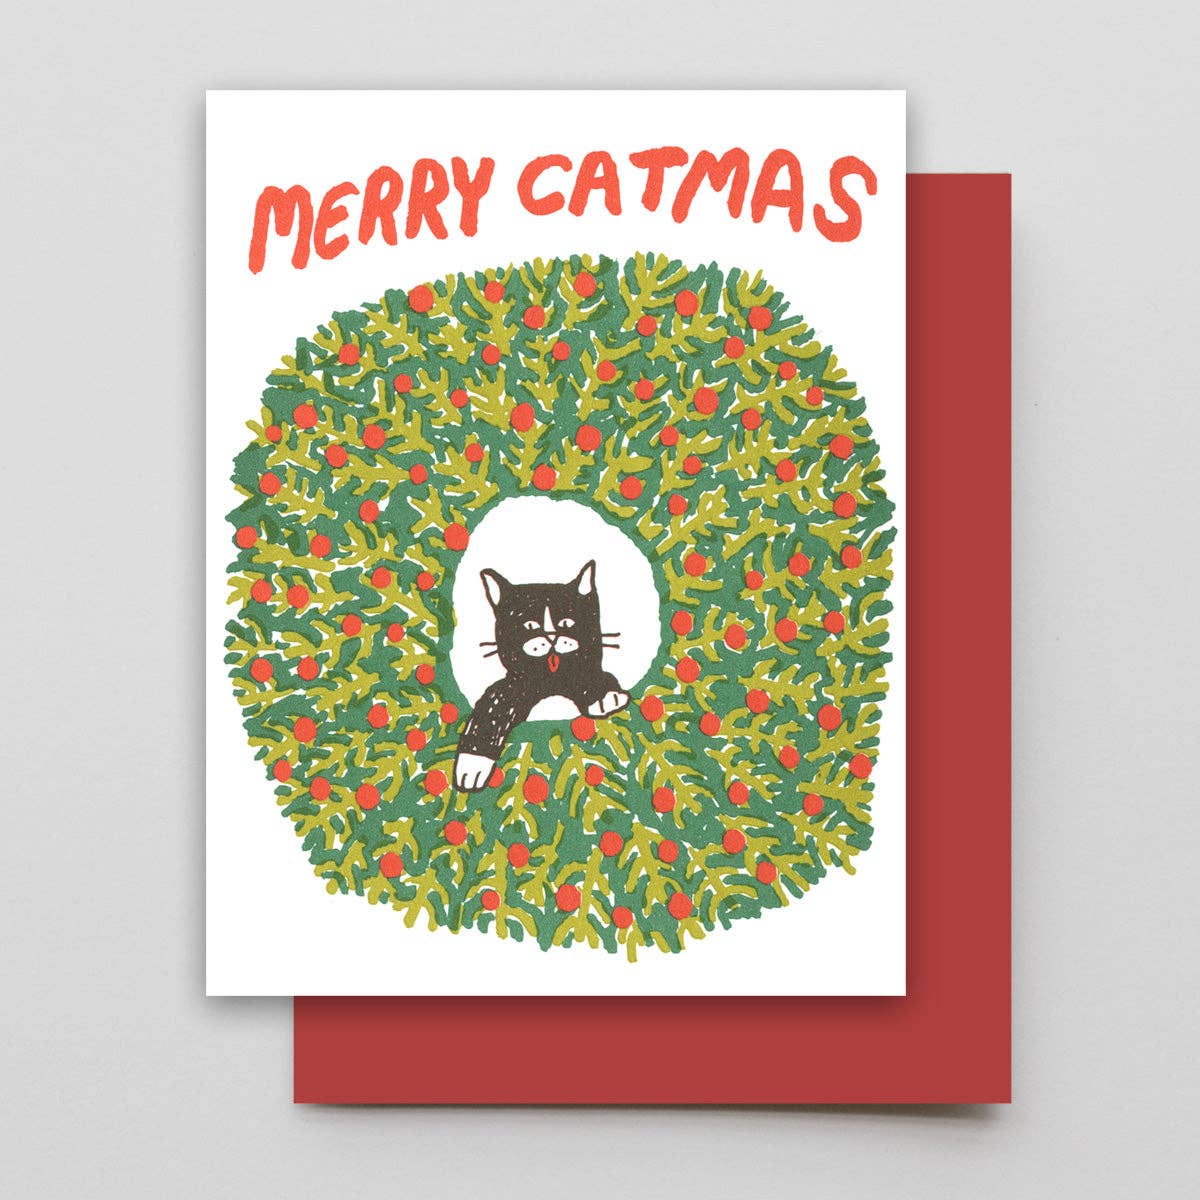 Merry Catmas: Single card